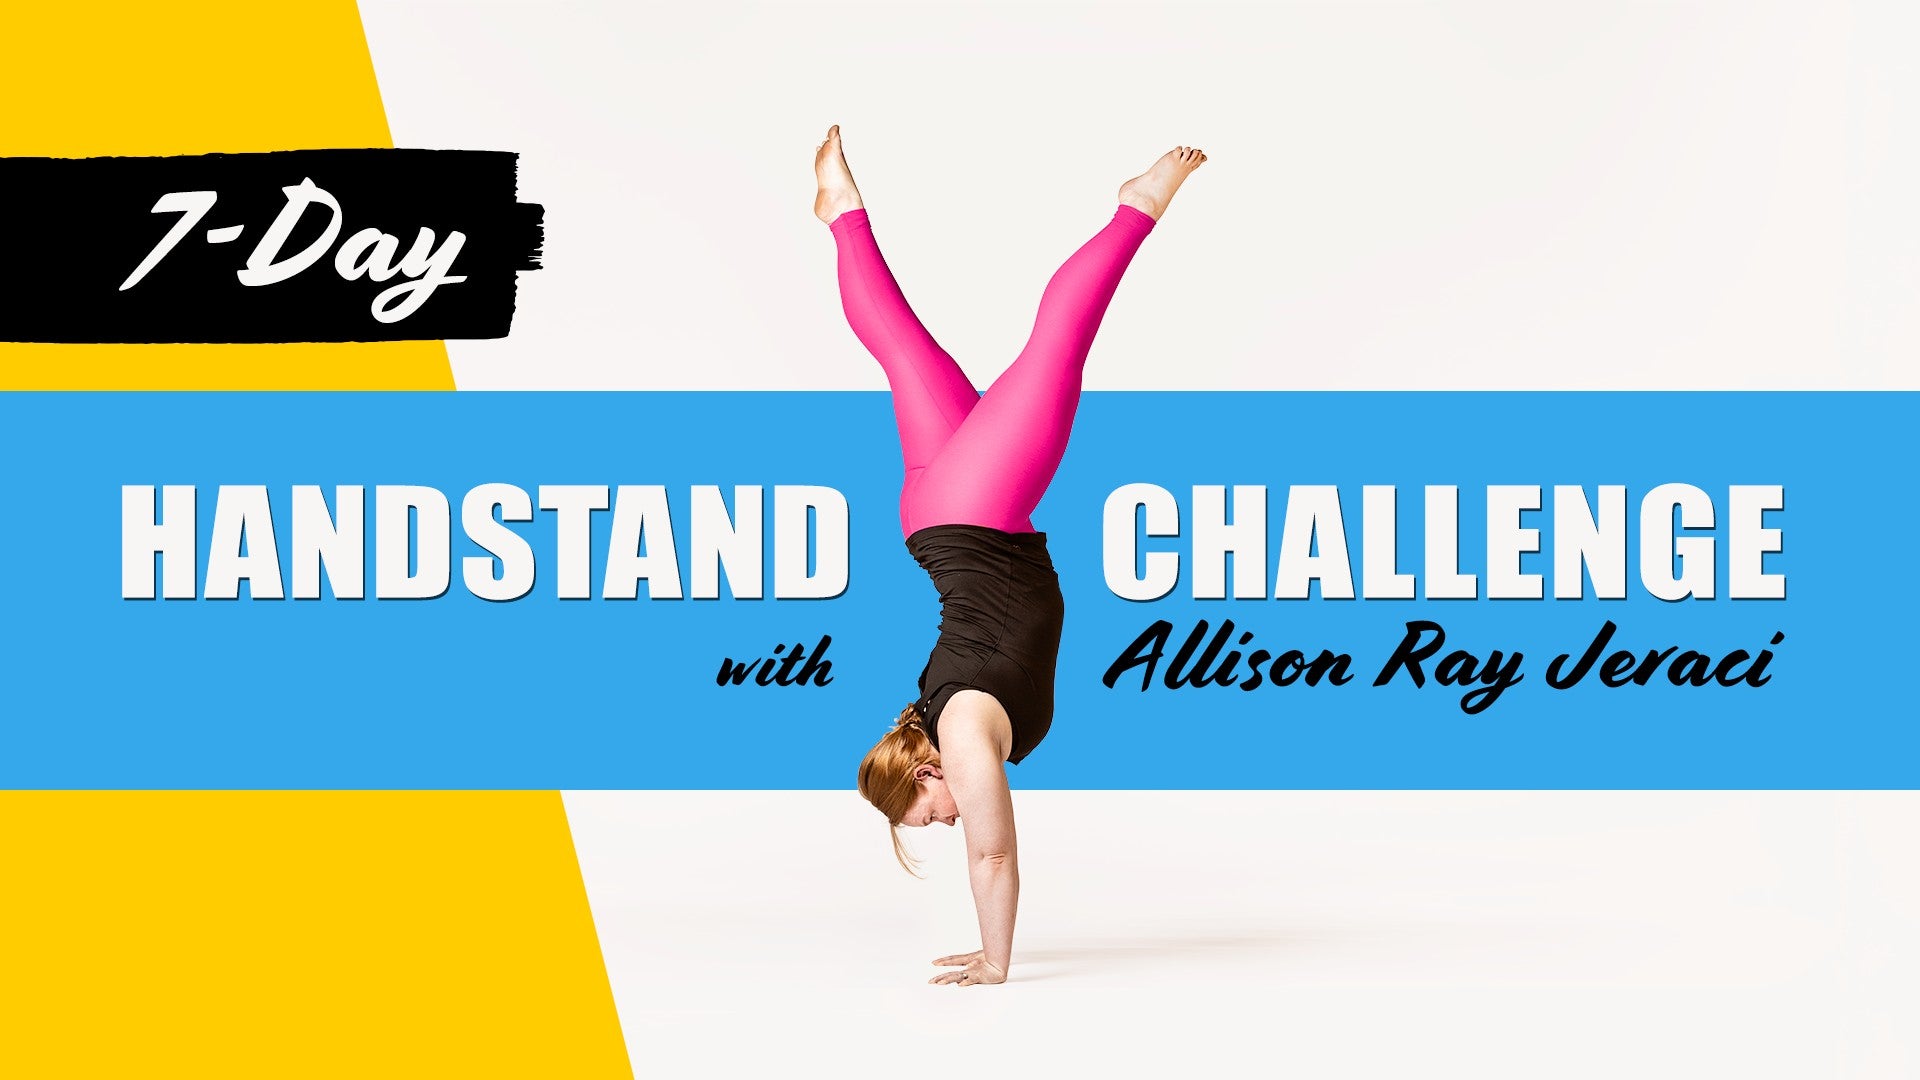 The 7-Day Handstand Challenge Artwork